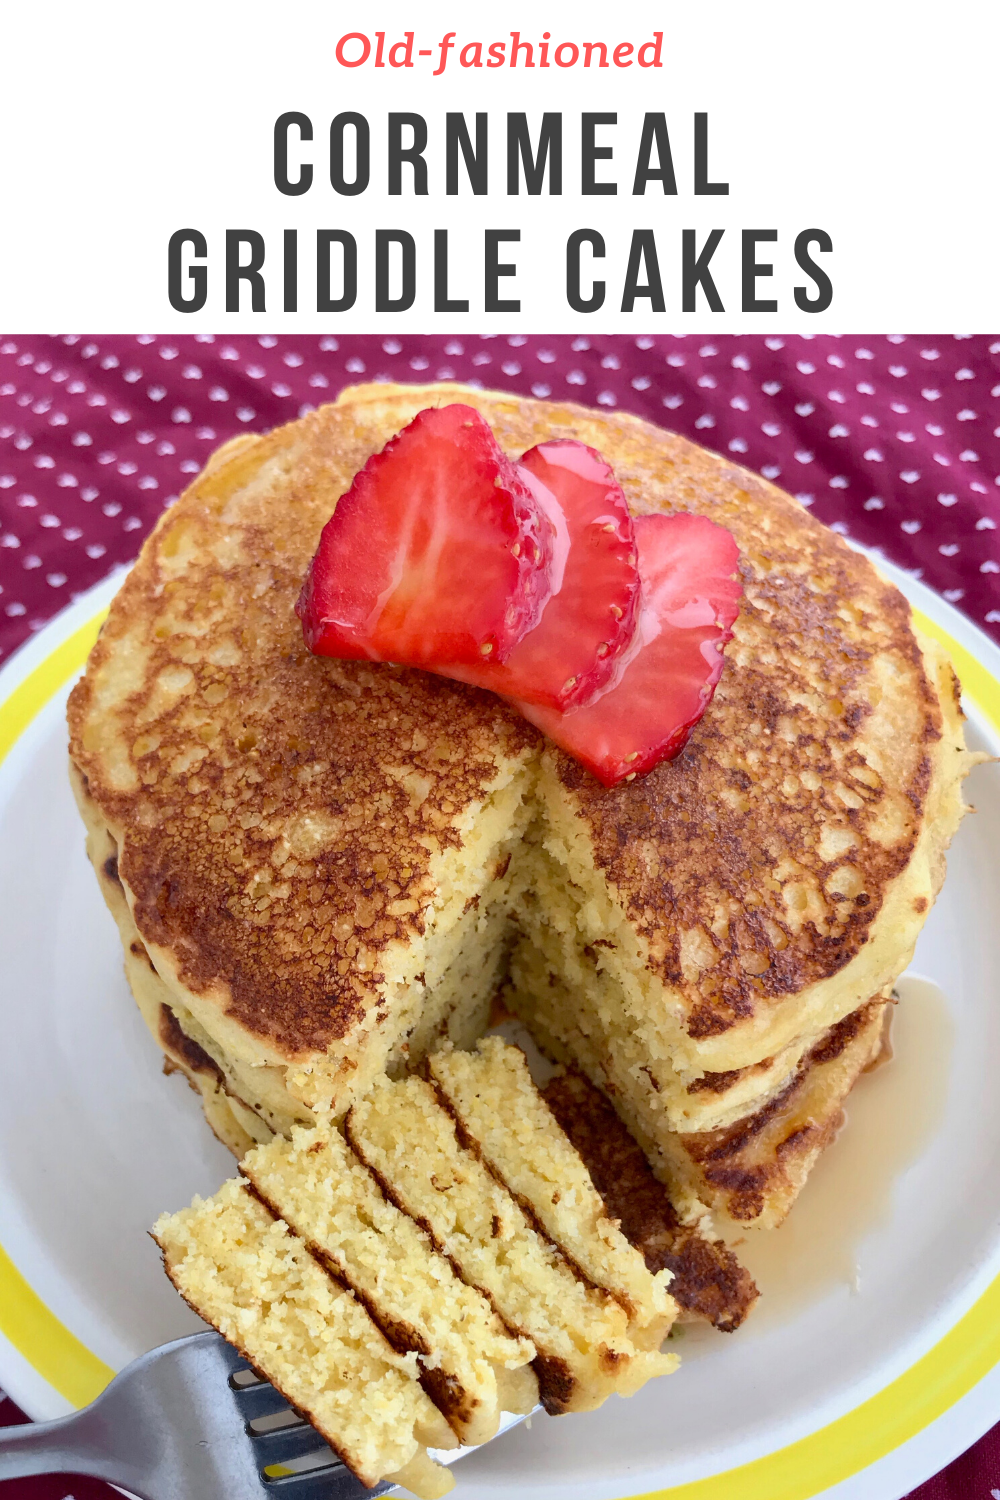 Buttermilk Griddle Cakes Recipe